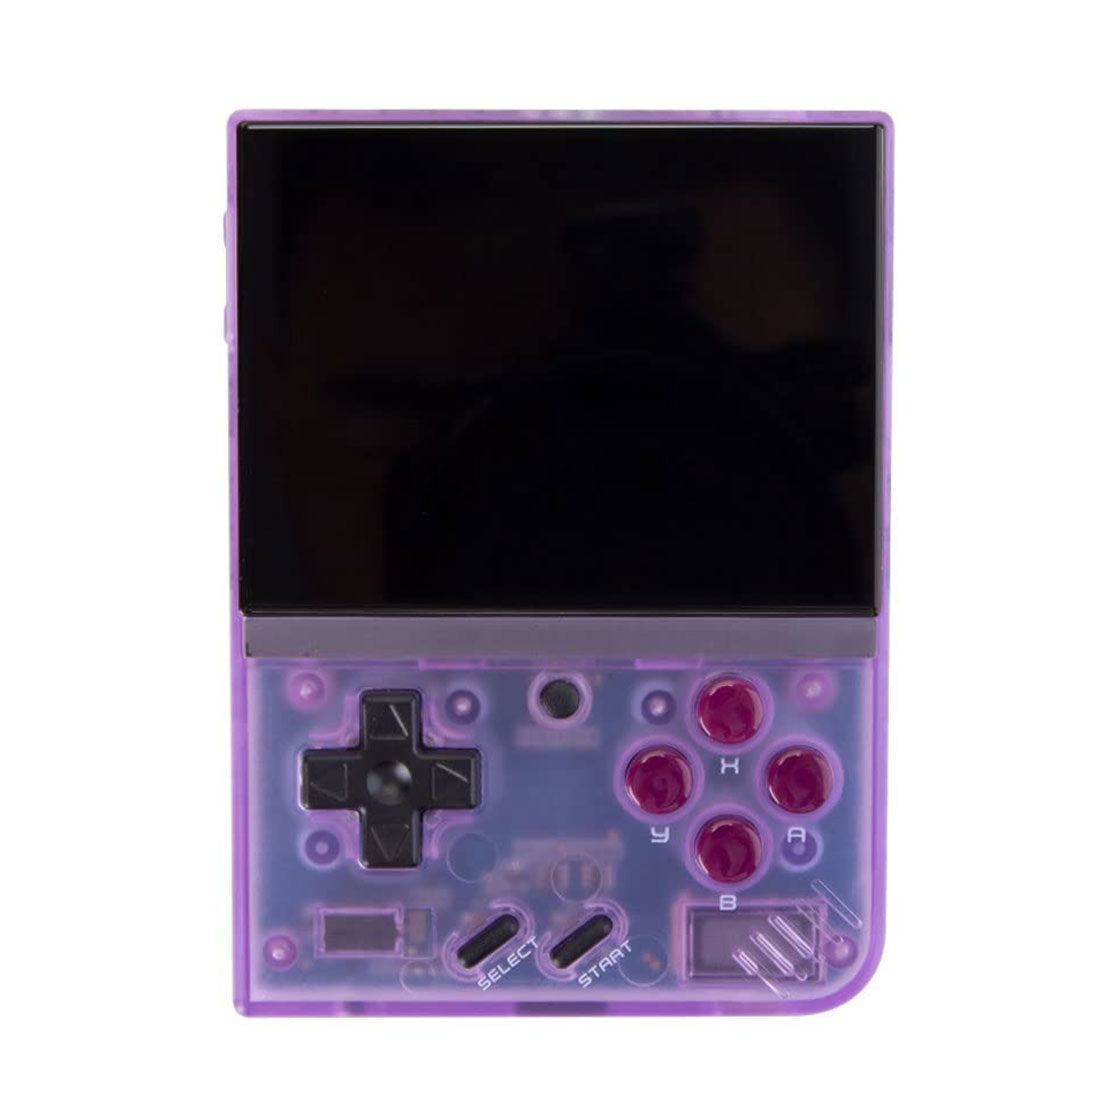 Miyoo Mini Plus - Retro Handheld Game Console